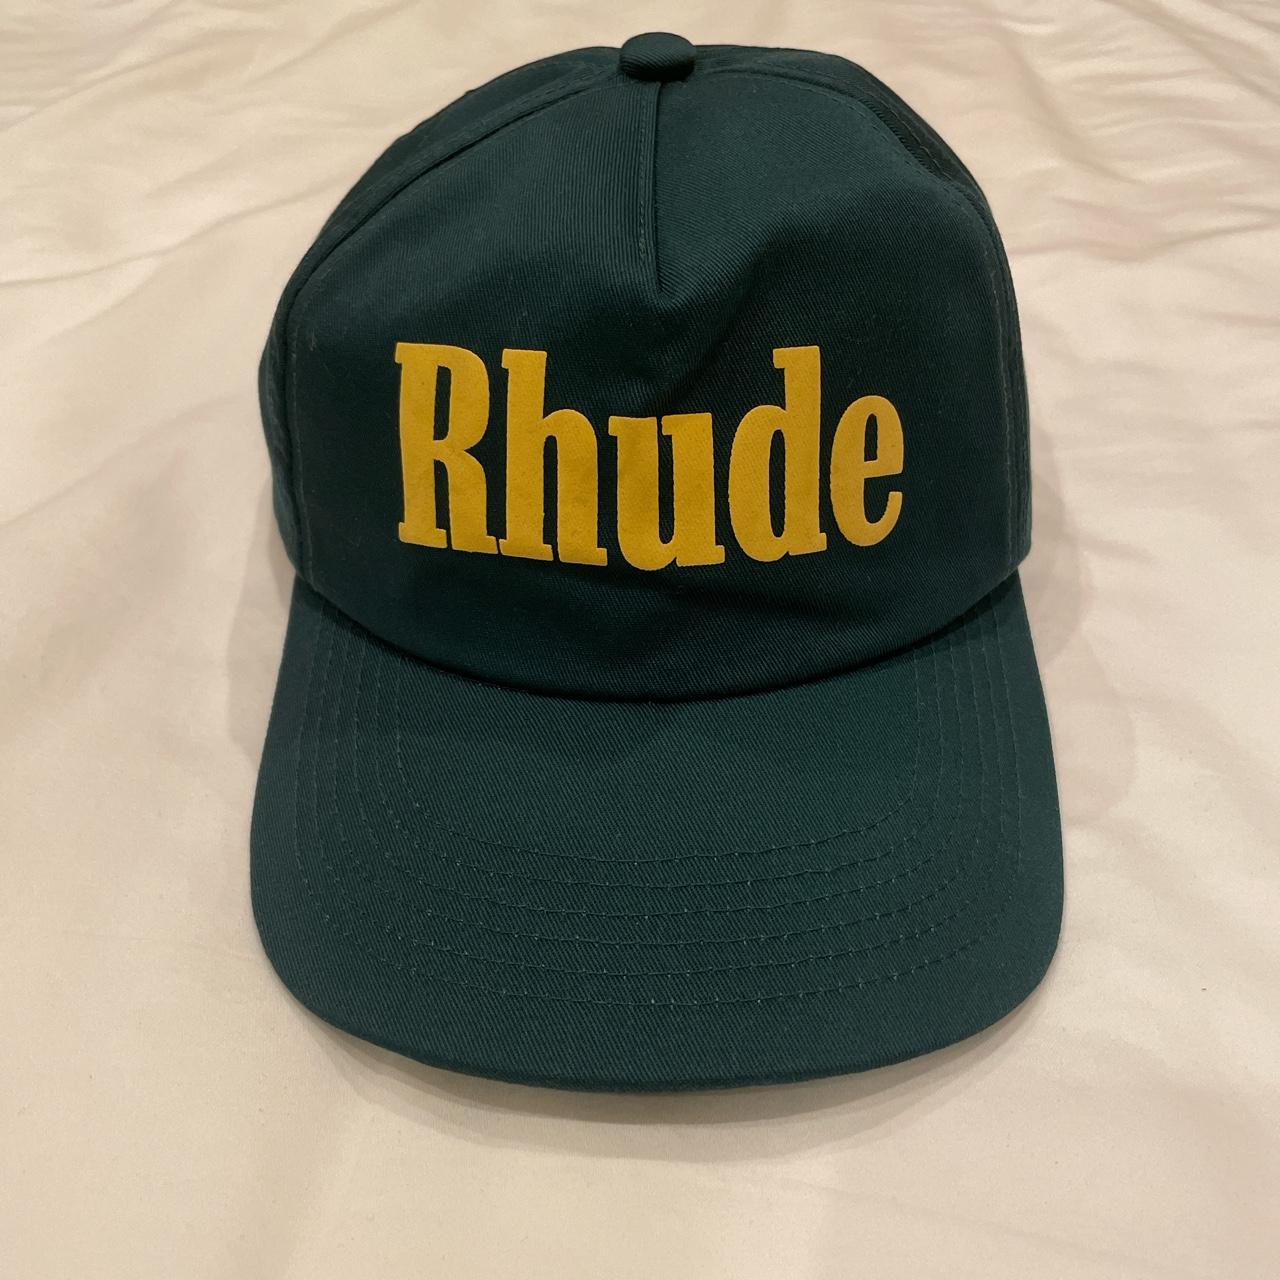 Product Image 3 - Dark green Rhude hat, New